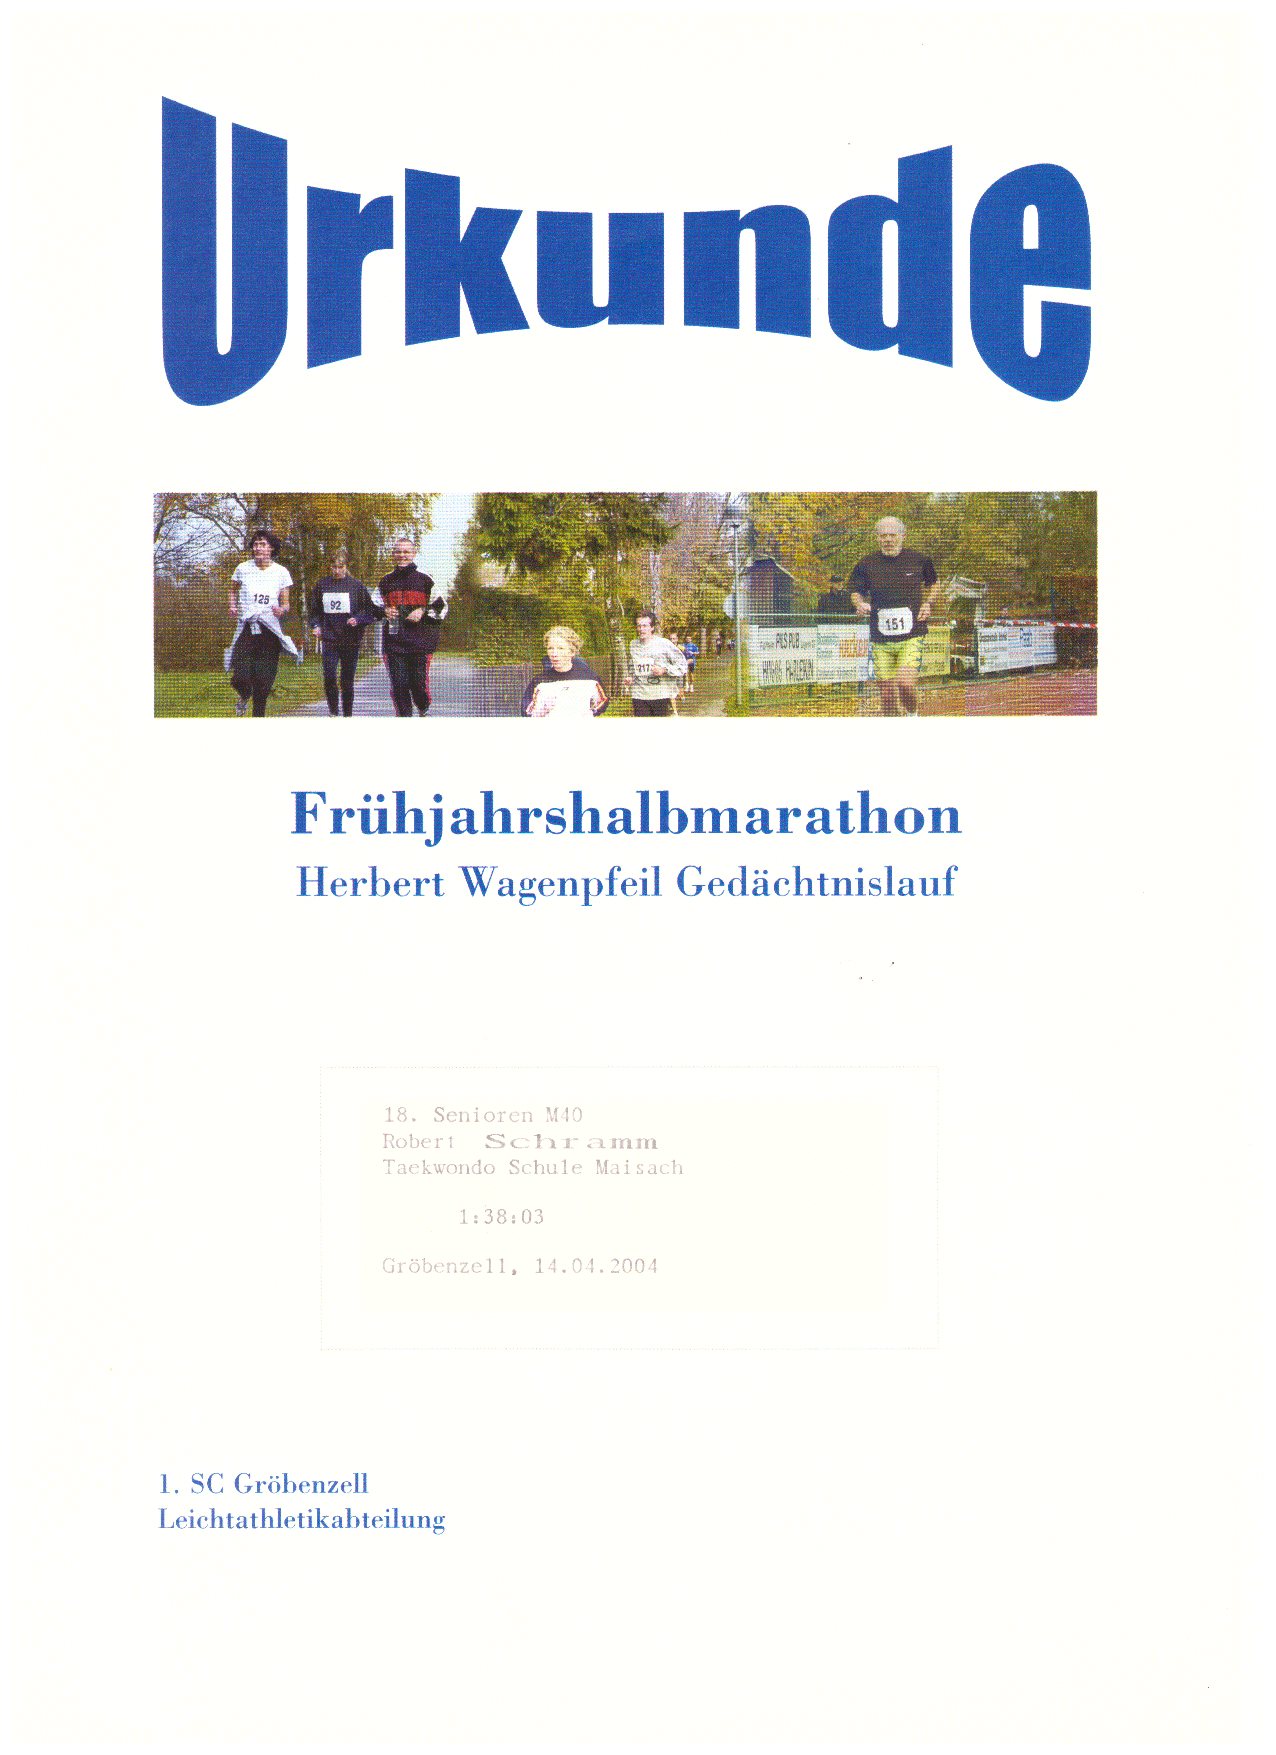 Urkunde-Gröbenzell-2004